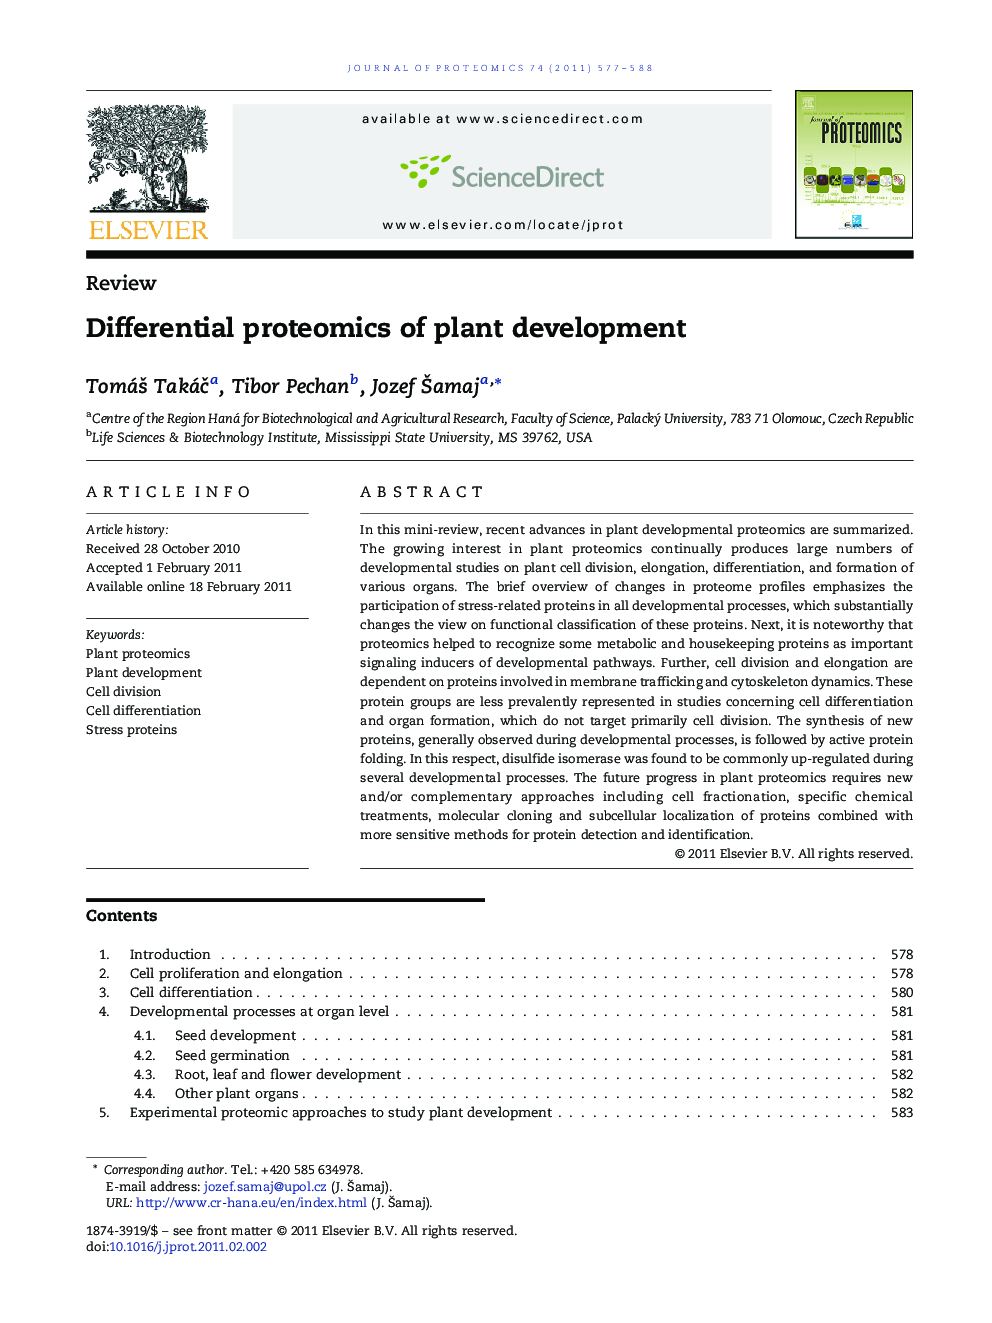 Differential proteomics of plant development